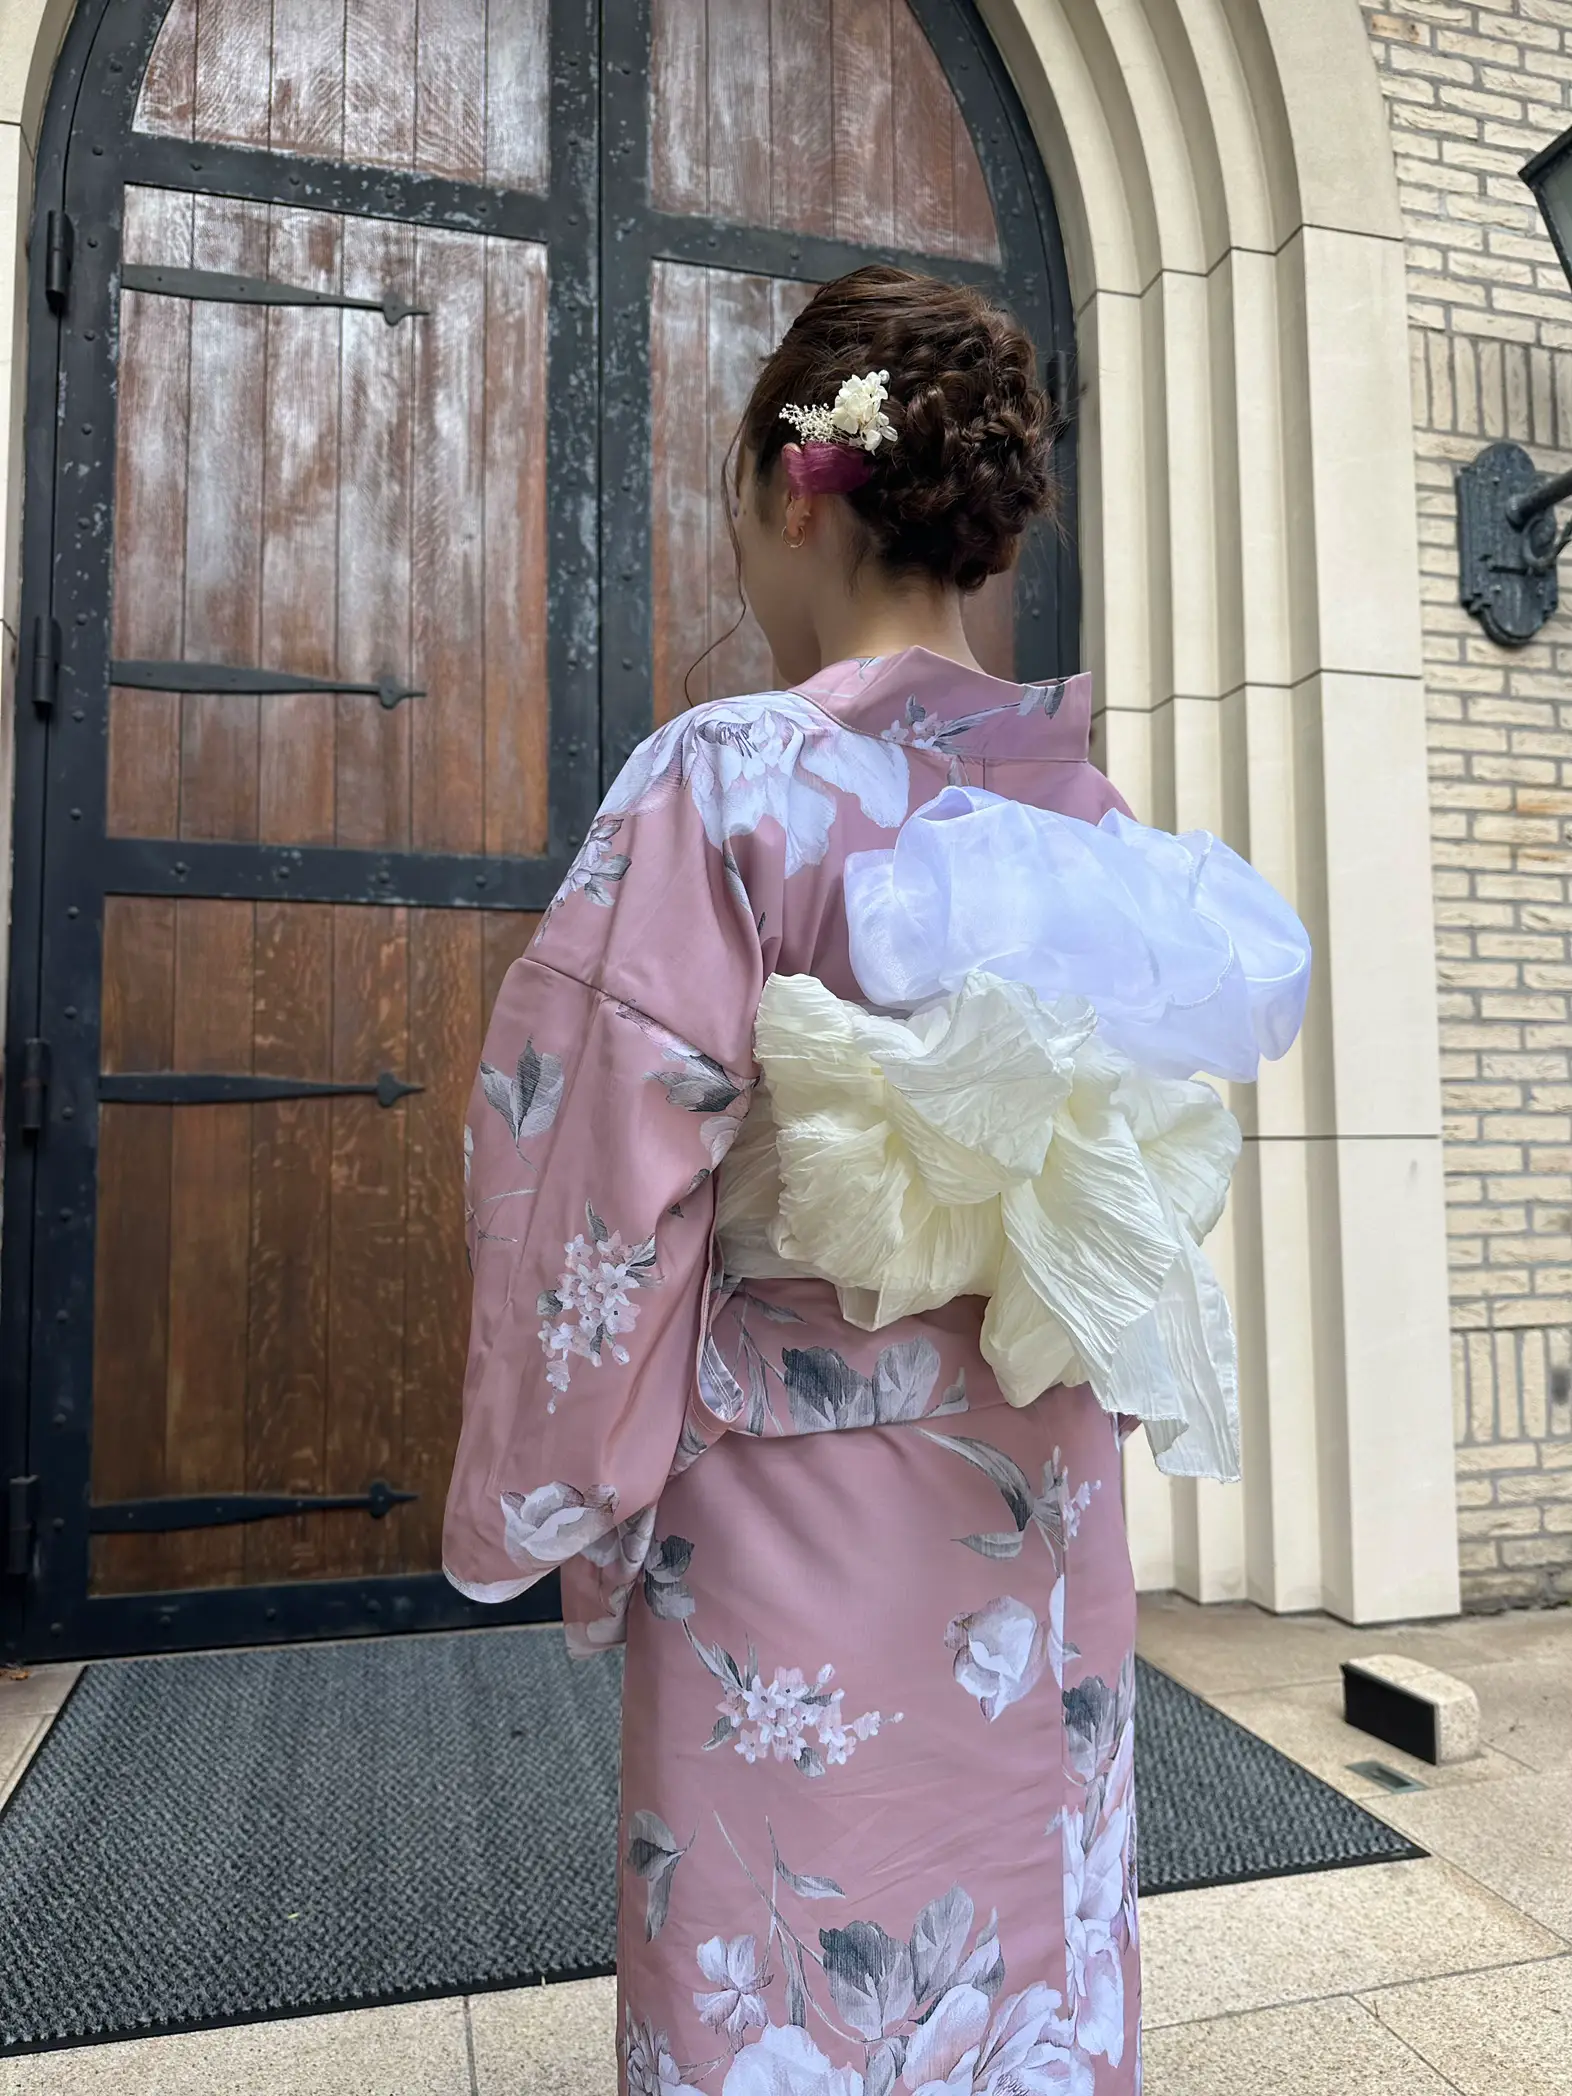 yukata outfit | Gallery posted by irodori | Lemon8